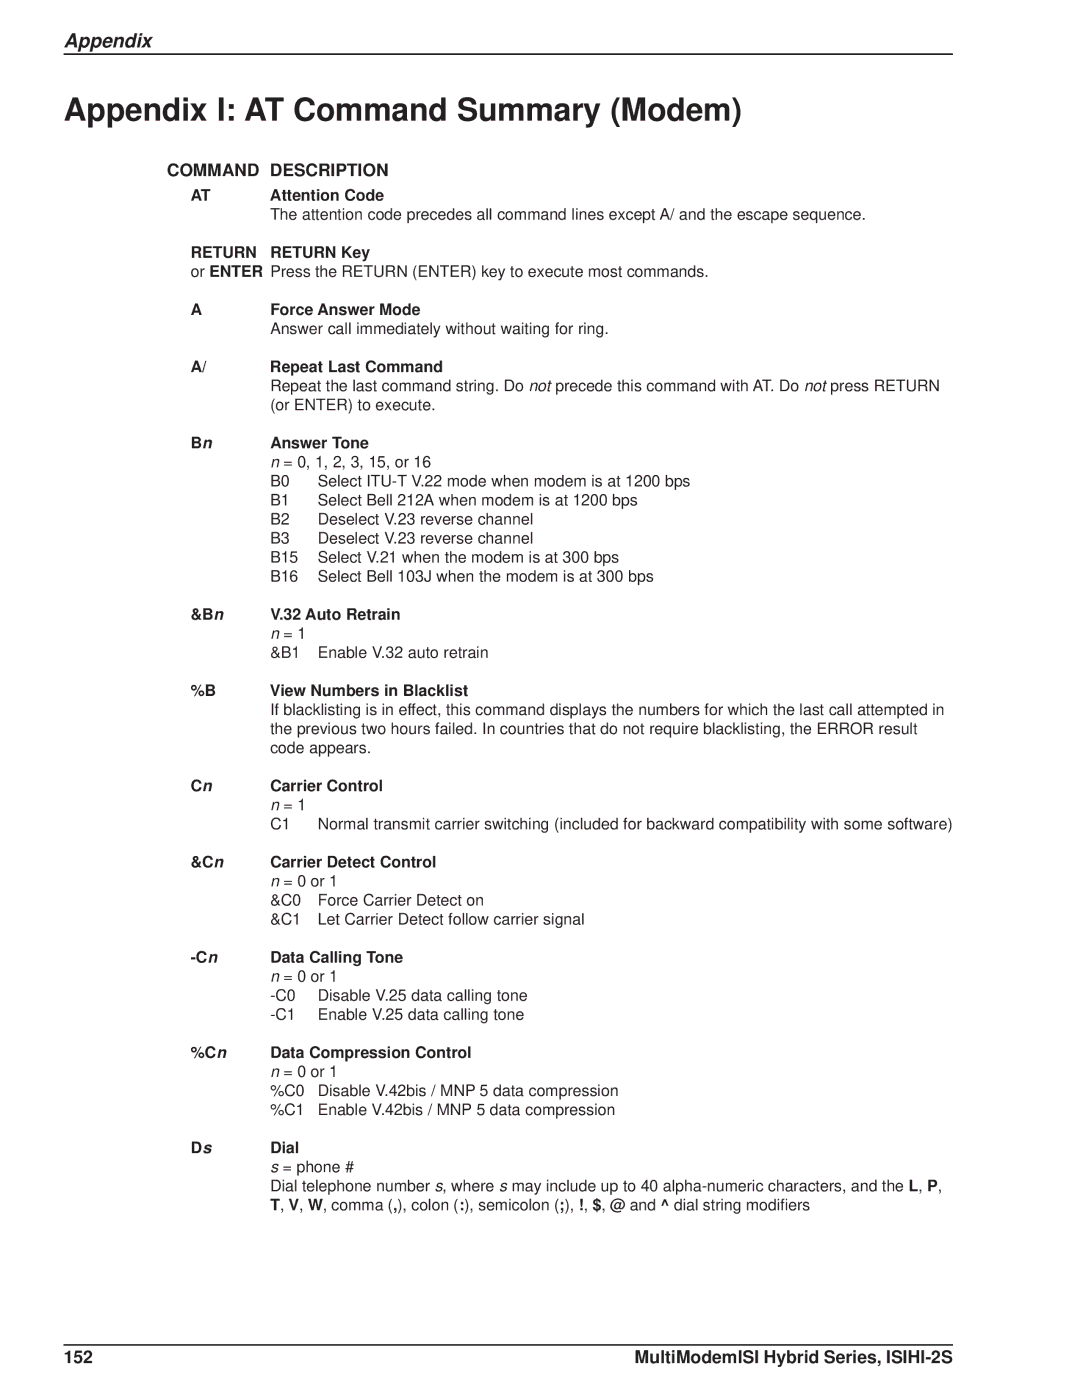 Multi Tech Equipment ISIHI-2S manual Appendix I AT Command Summary Modem, Command Description 